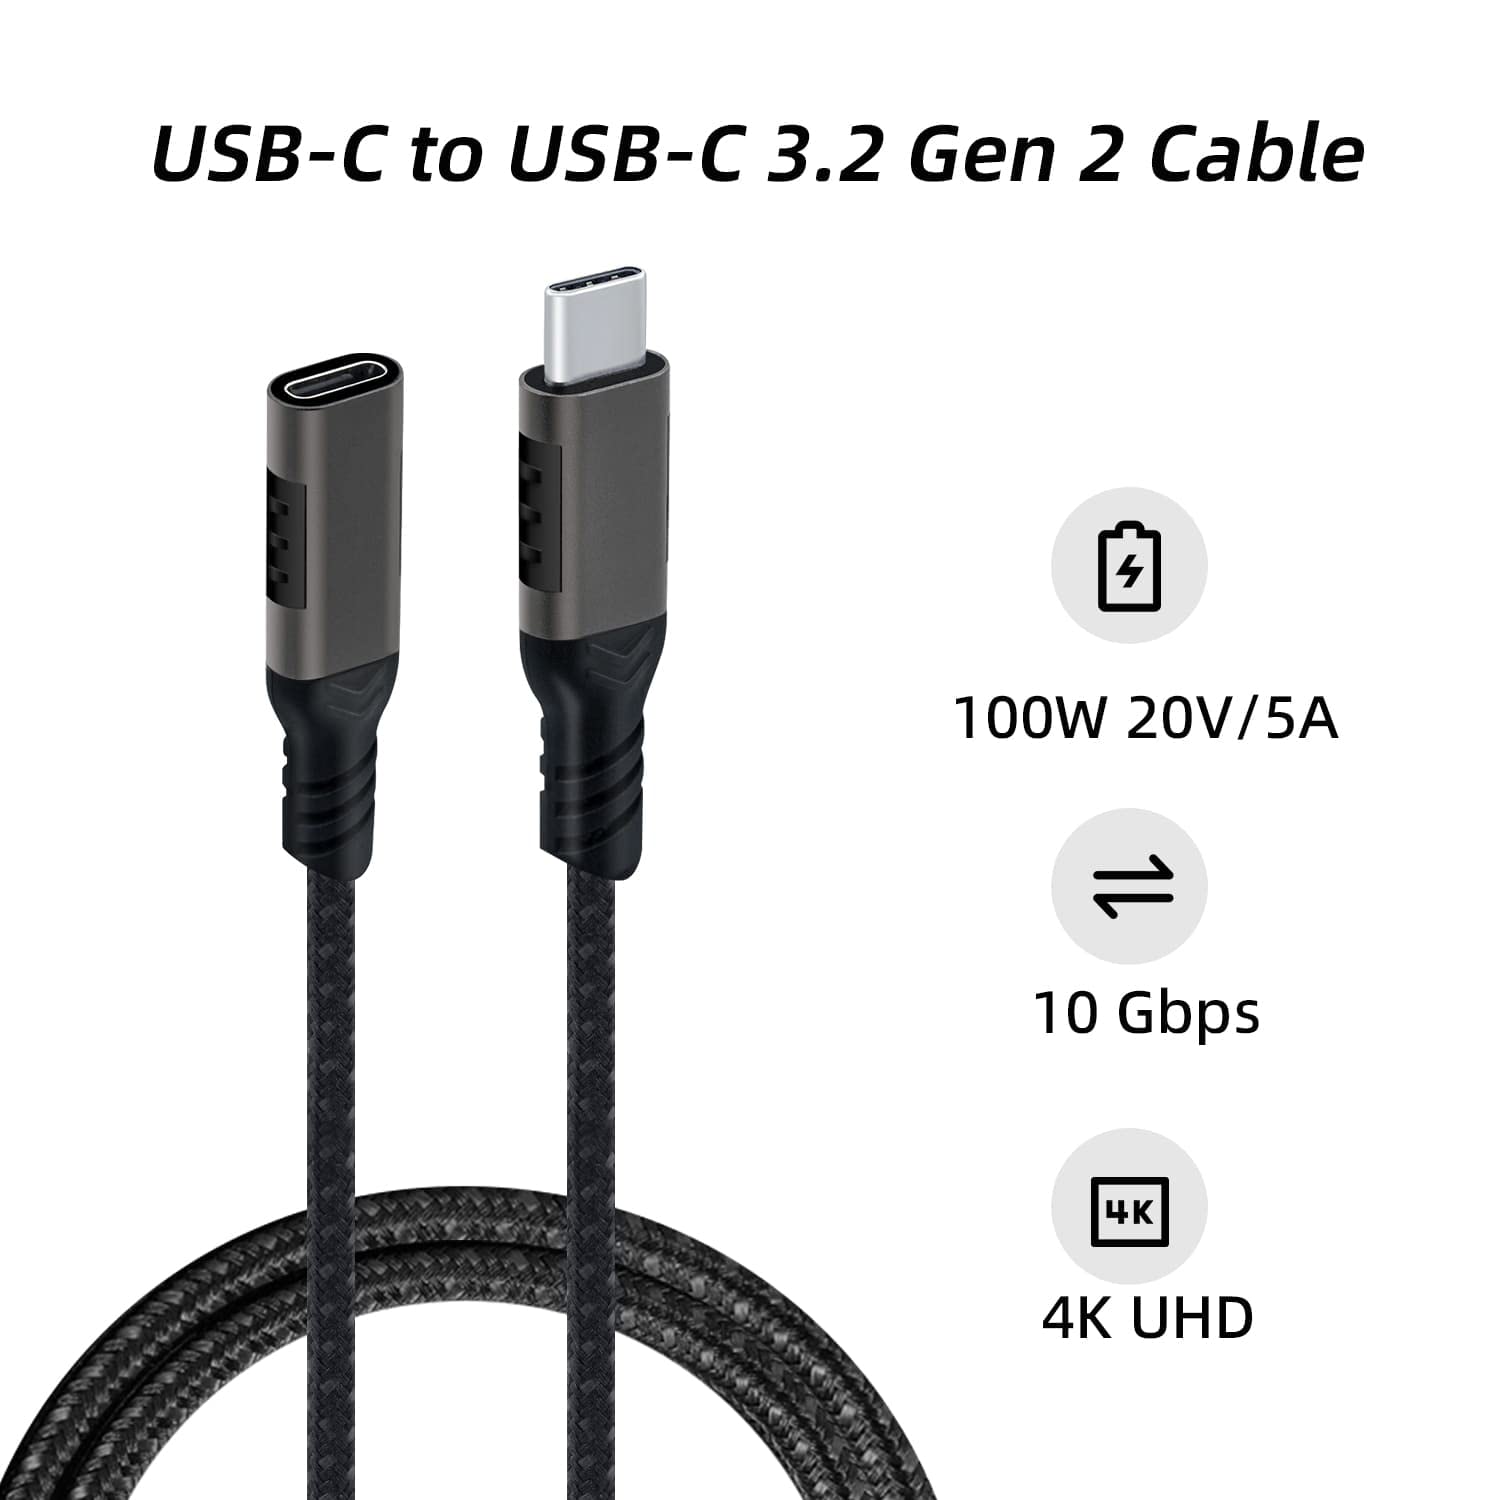 Mcbazel-Extension Cable-USB C-6.56FT-FWLB